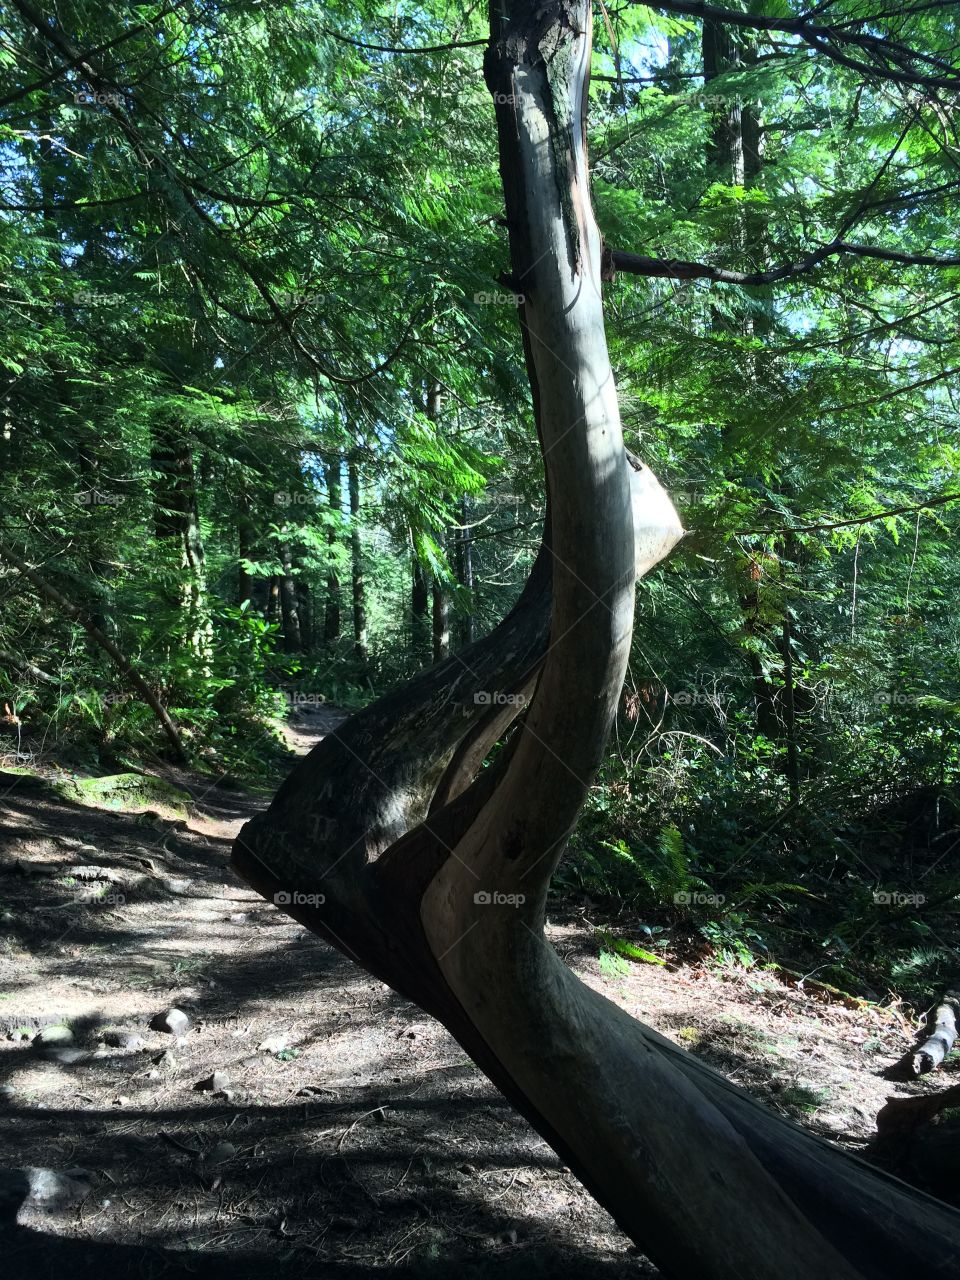 Bent tree. Oddly shaped tree